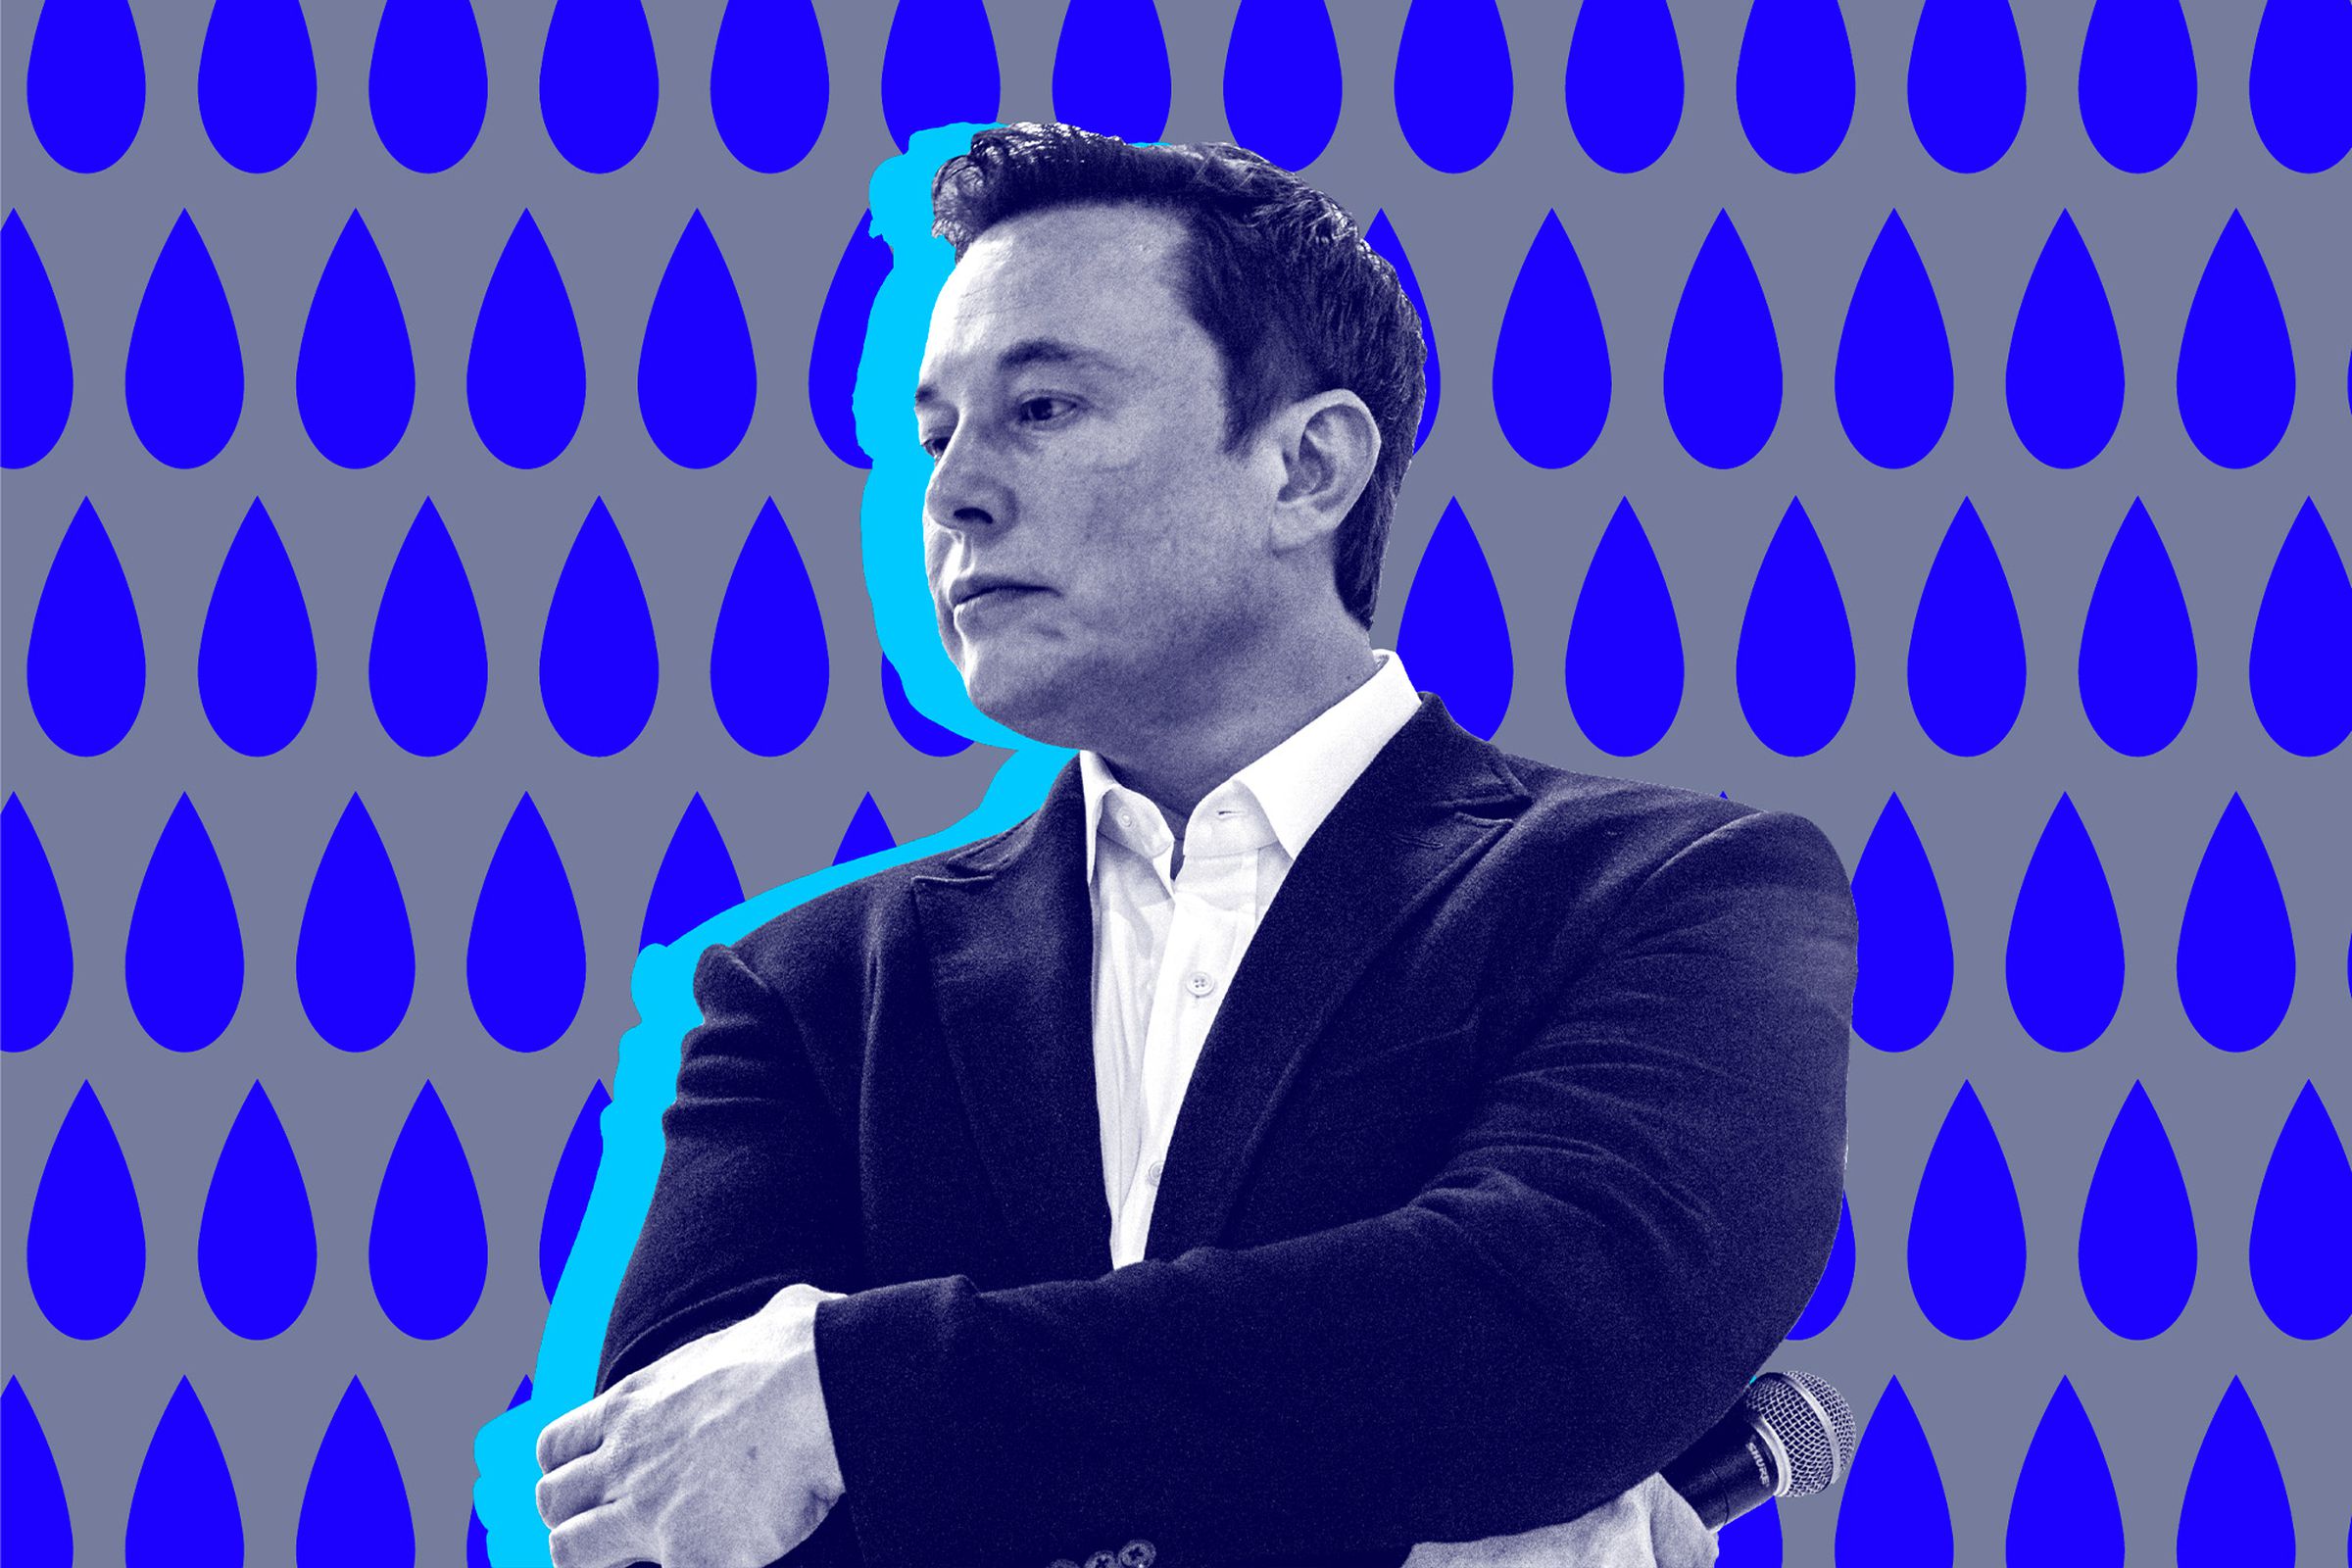 Elon Musk is theoretically sad that Tesla investors lost money because of his tweets